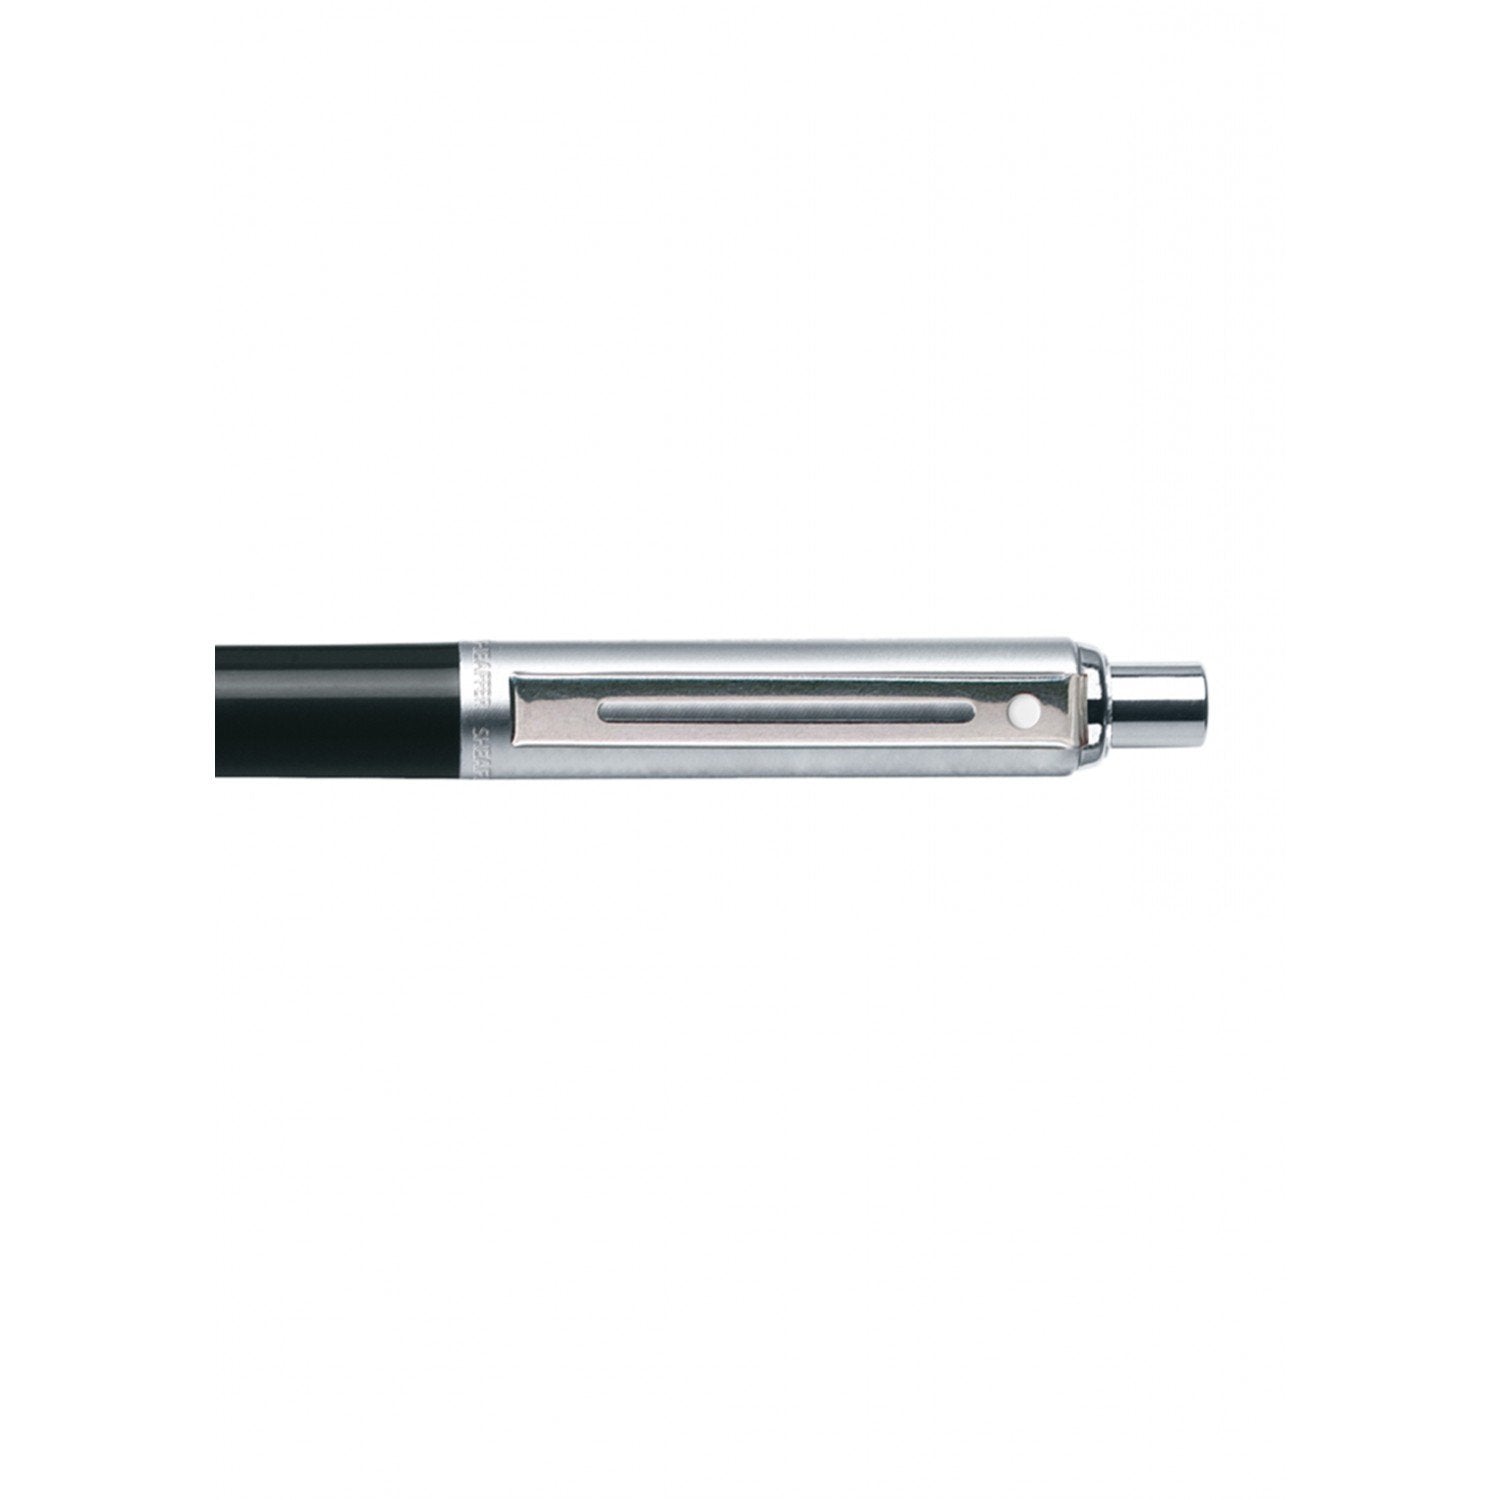 Sheaffer® Sentinel Black and Chrome Ballpoint Pen With Chrome Trims